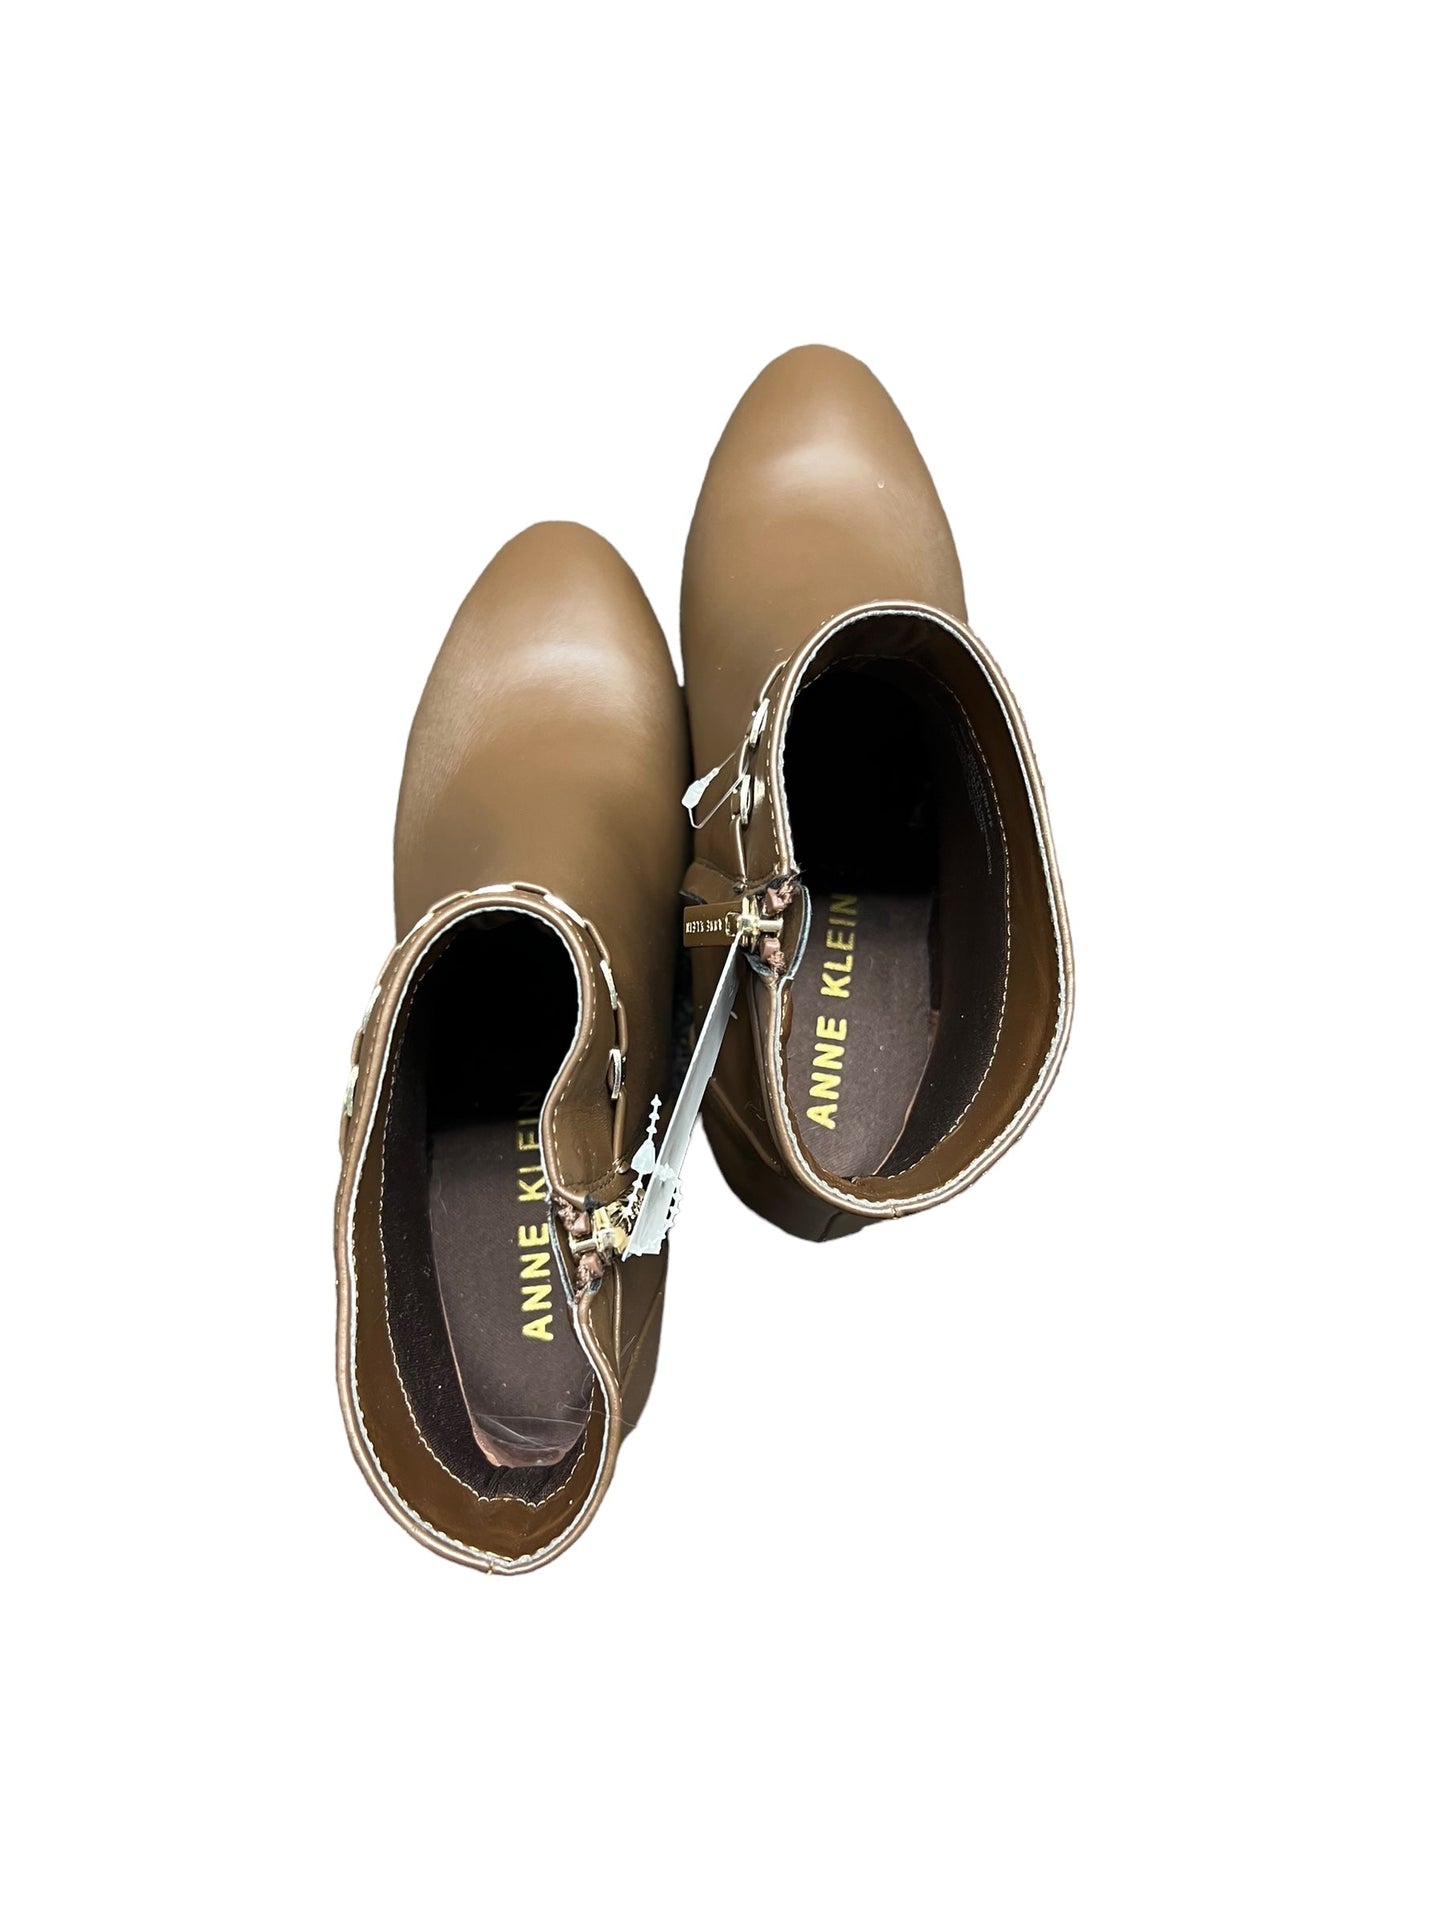 Brown Boots Ankle Heels Anne Klein, Size 8.5